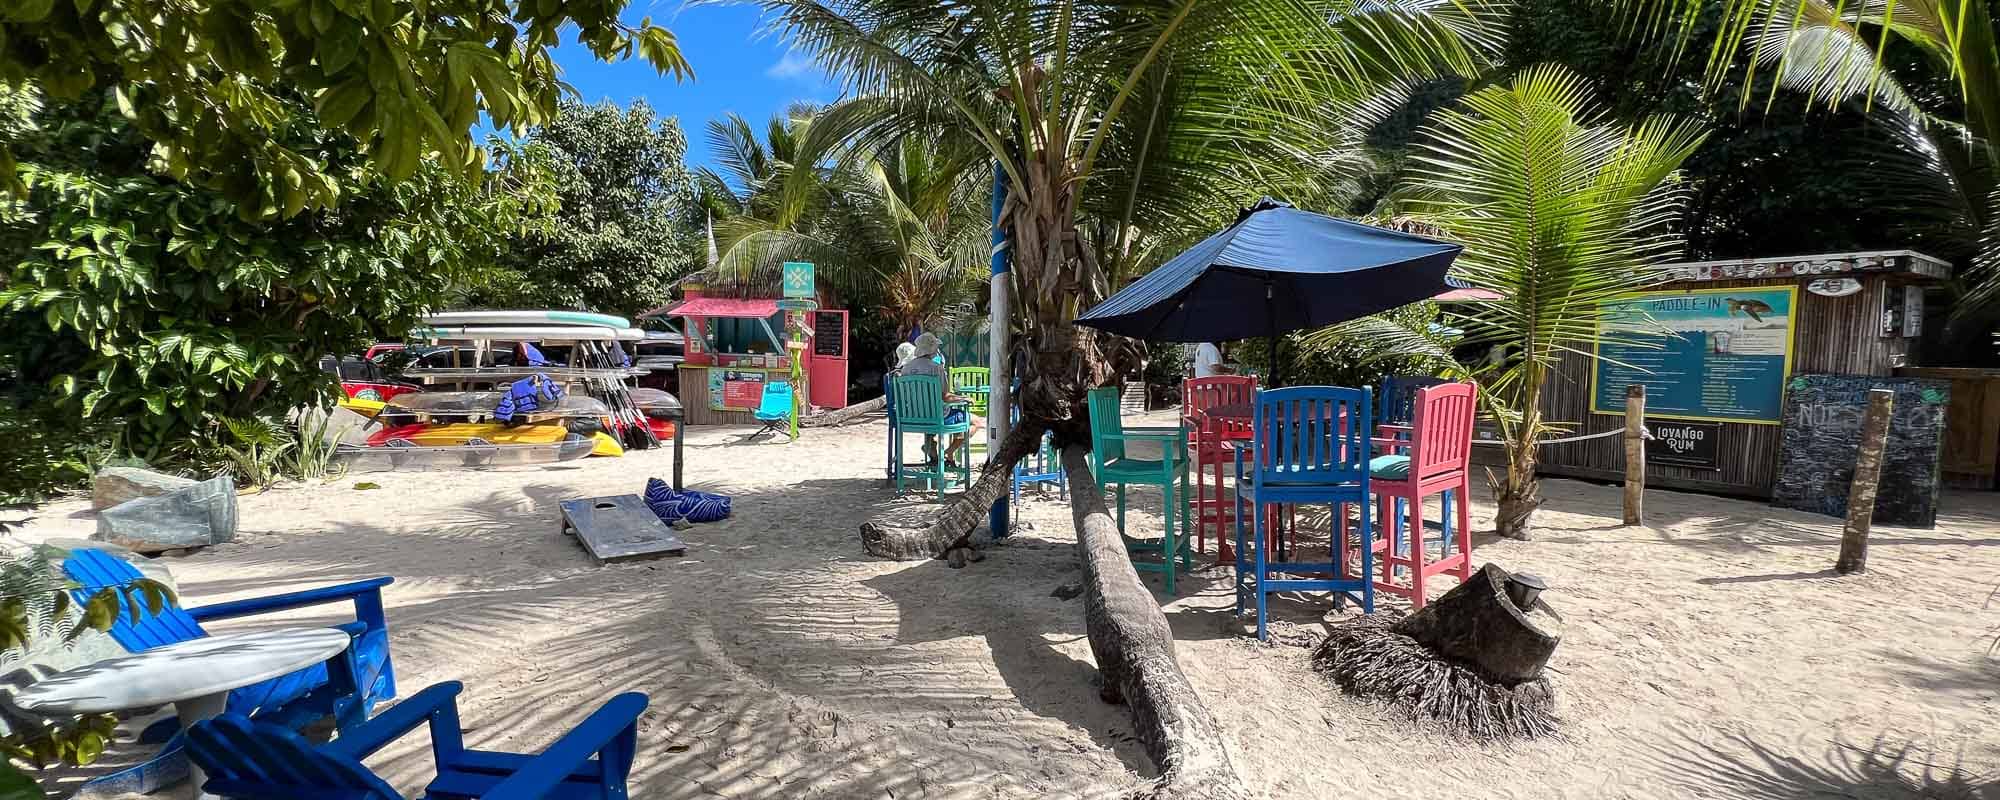 Beach bar and food truck at Maho Bay Beach in Virgin Islands National Park, St. John